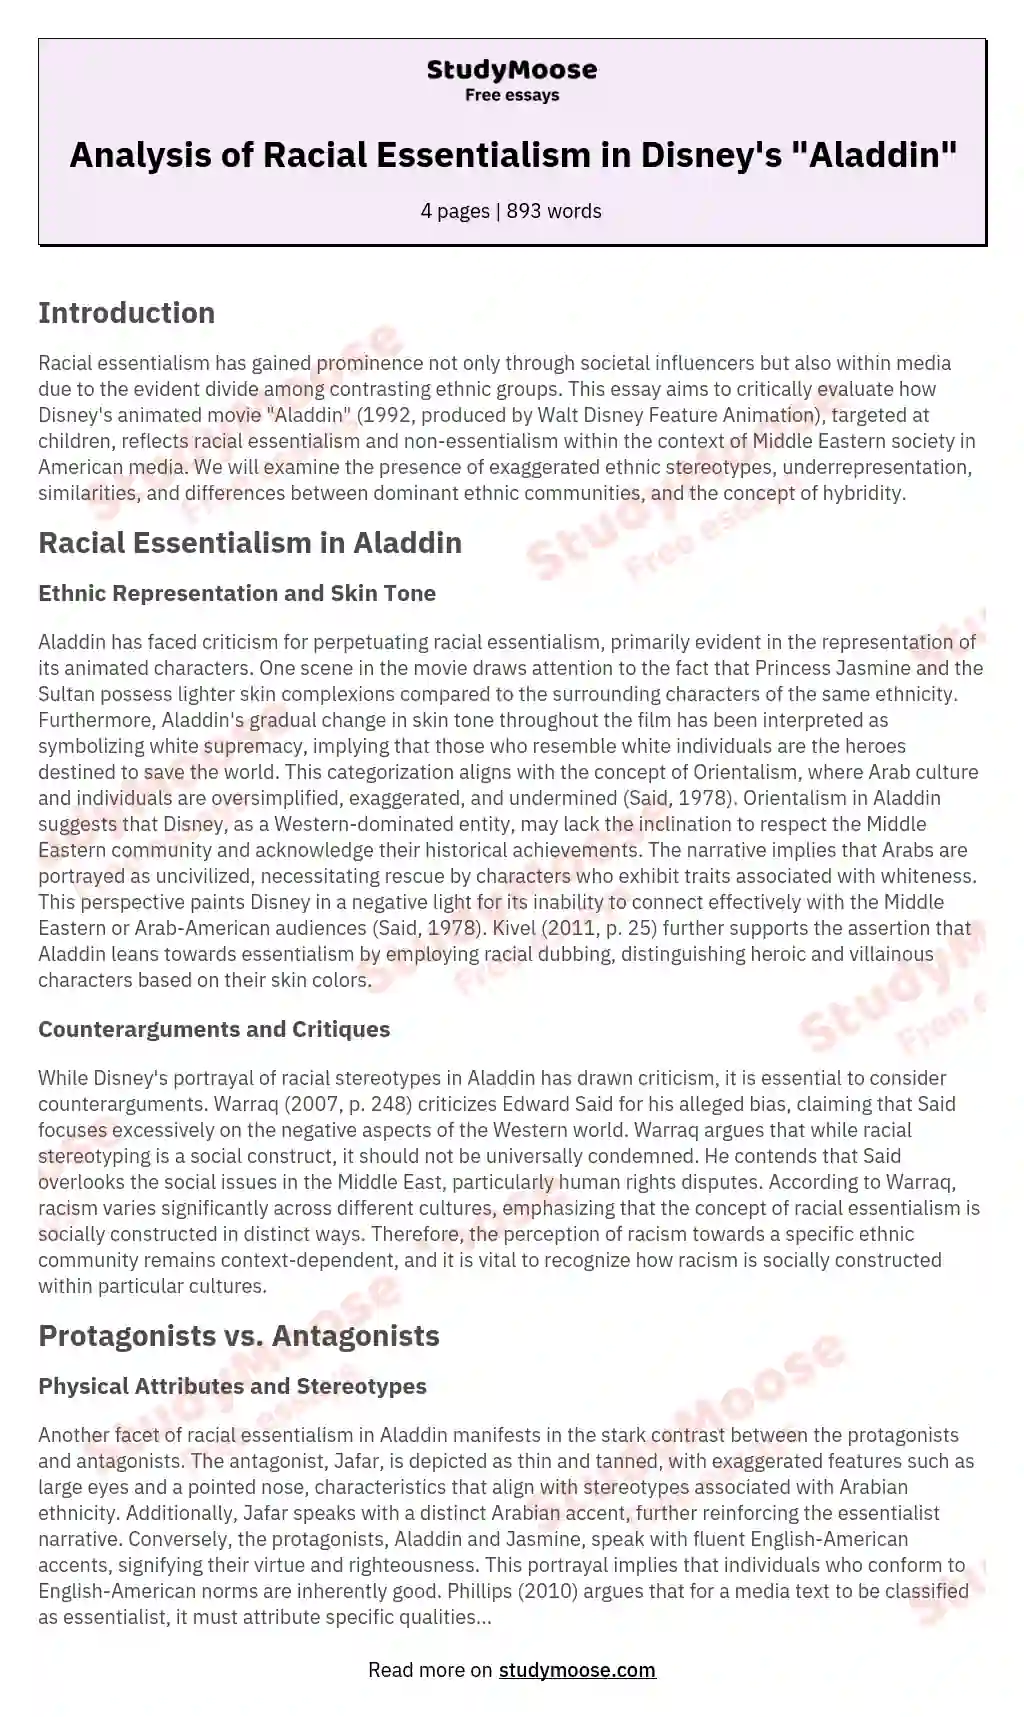 Analysis of Racial Essentialism in Disney's "Aladdin" essay